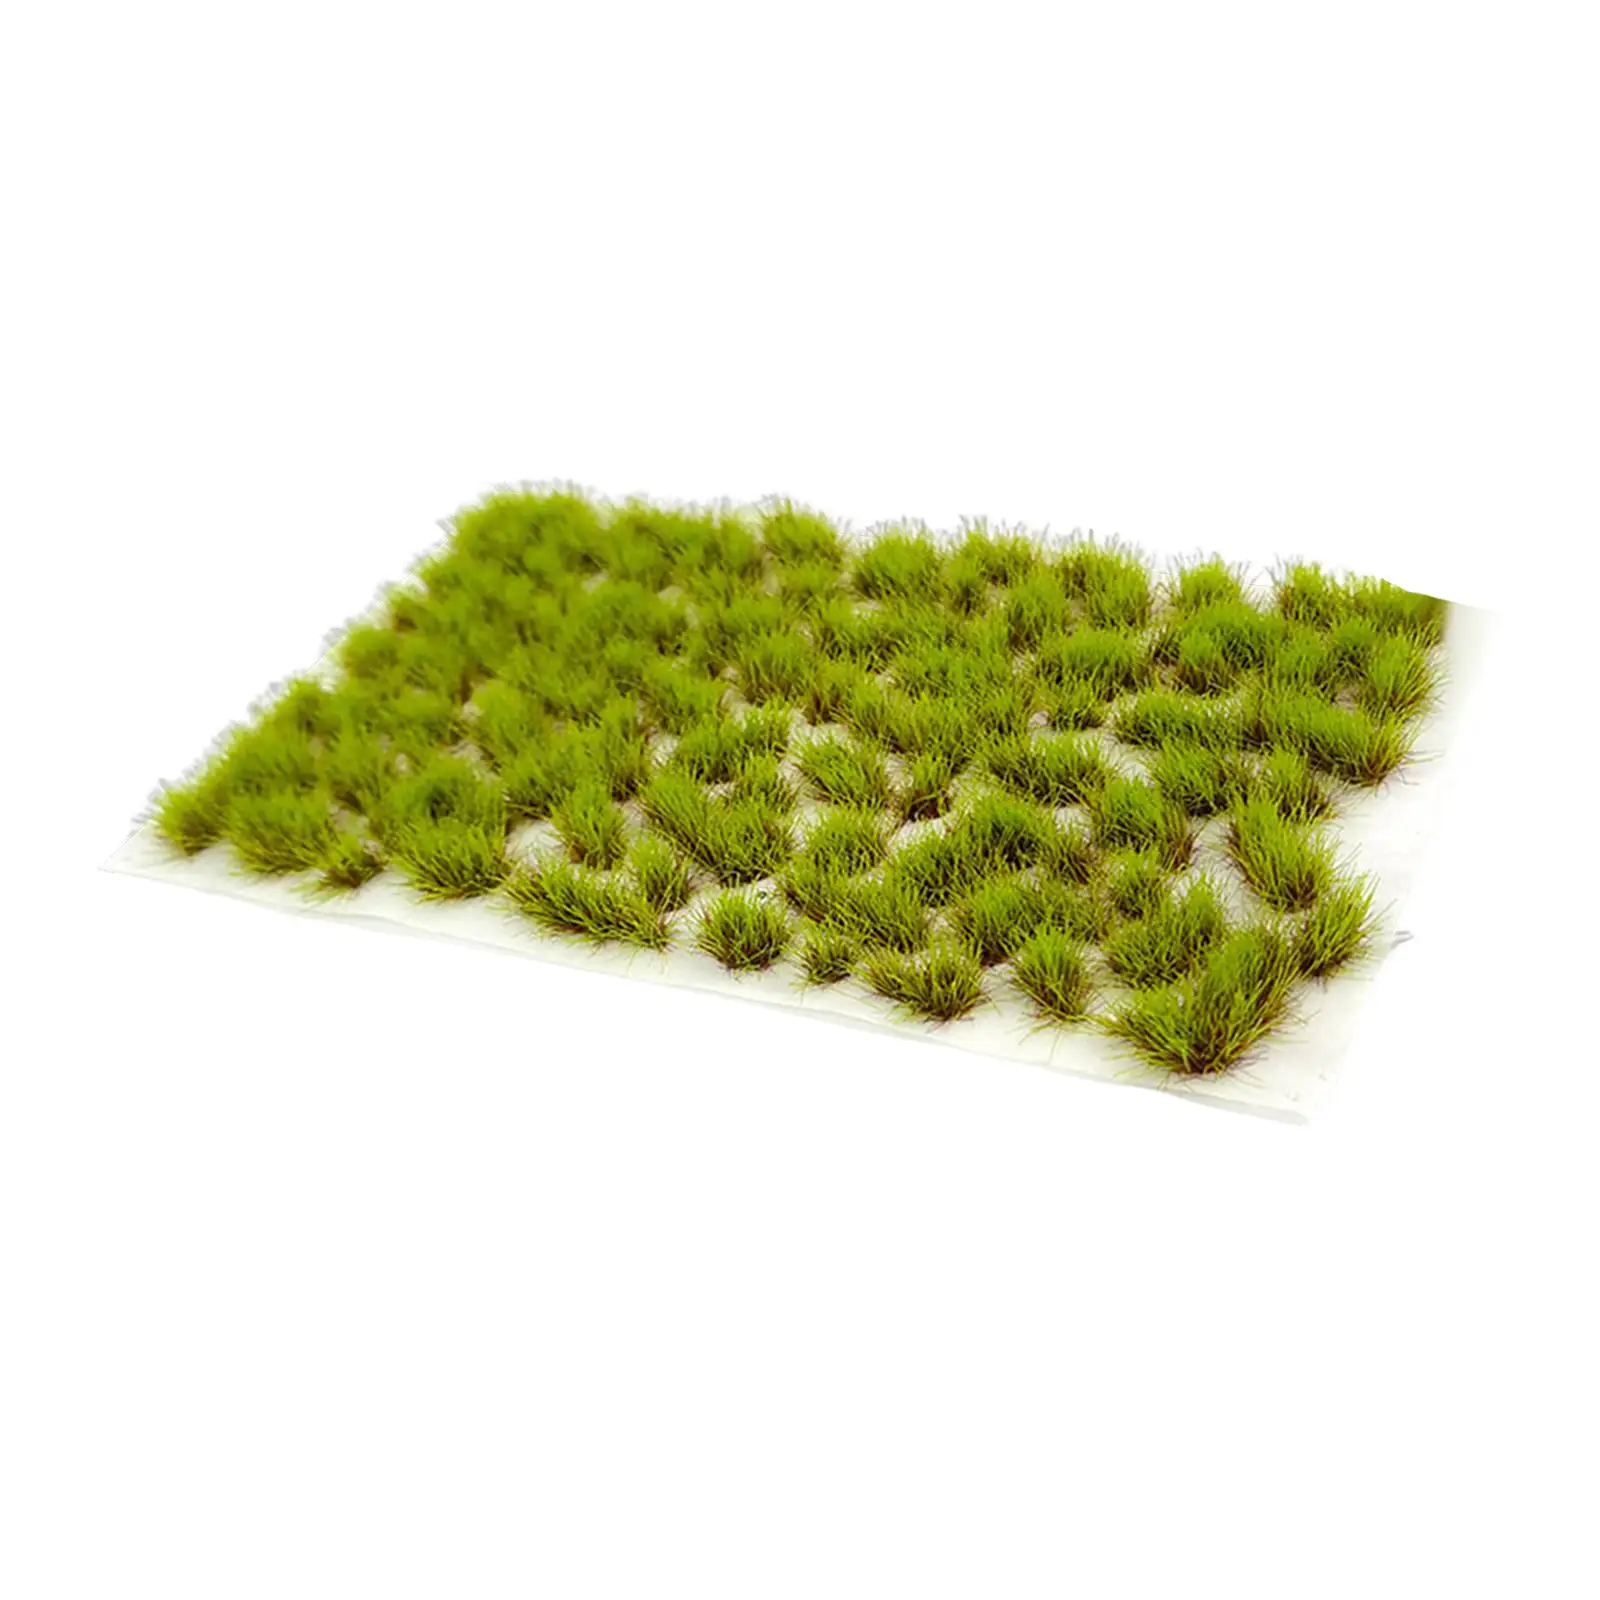 95 Pieces Large Cluster Grass Sand Table Miniature Scene for DIY Landscape